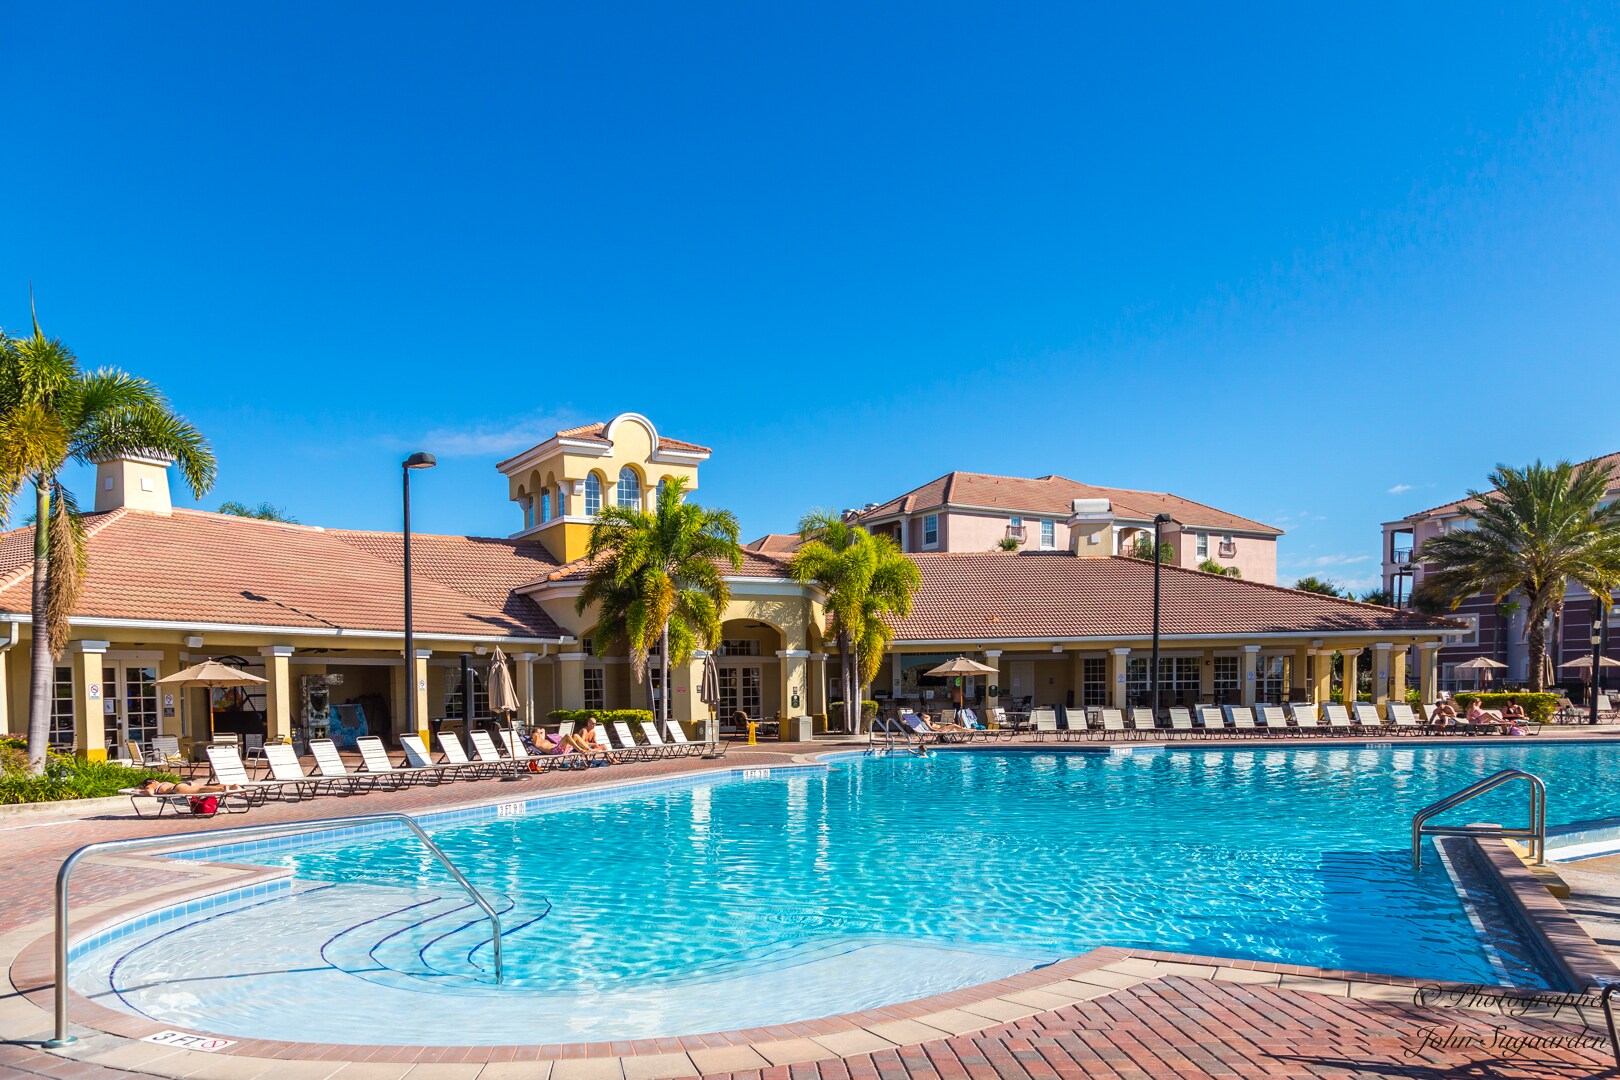 Sparkling resort pool